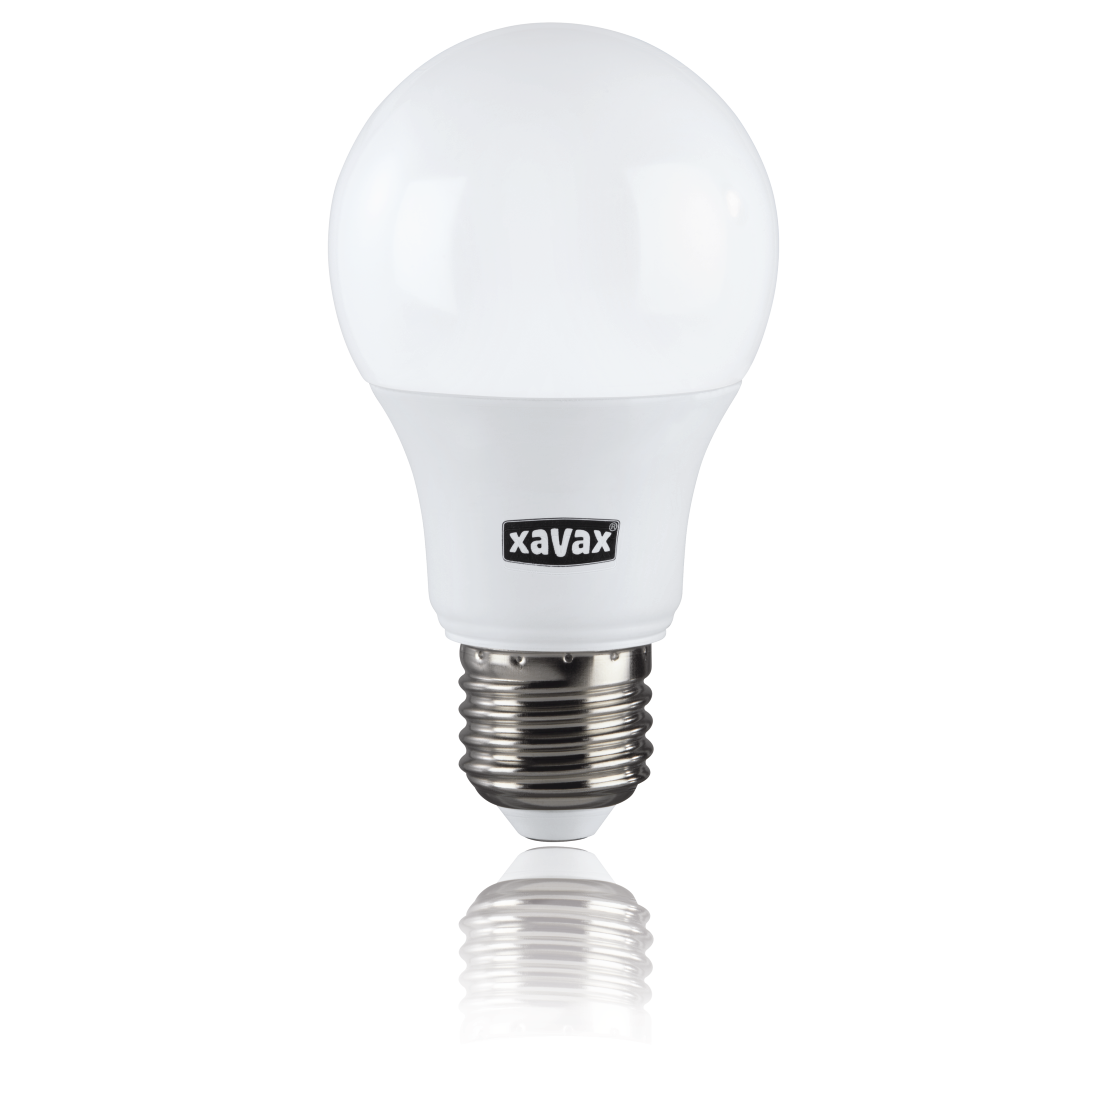 abx2 Druckfähige Abbildung 2 - Xavax, LED-Lampe, E27, 806lm ersetzt 60W, Glühlampe, Warmweiß